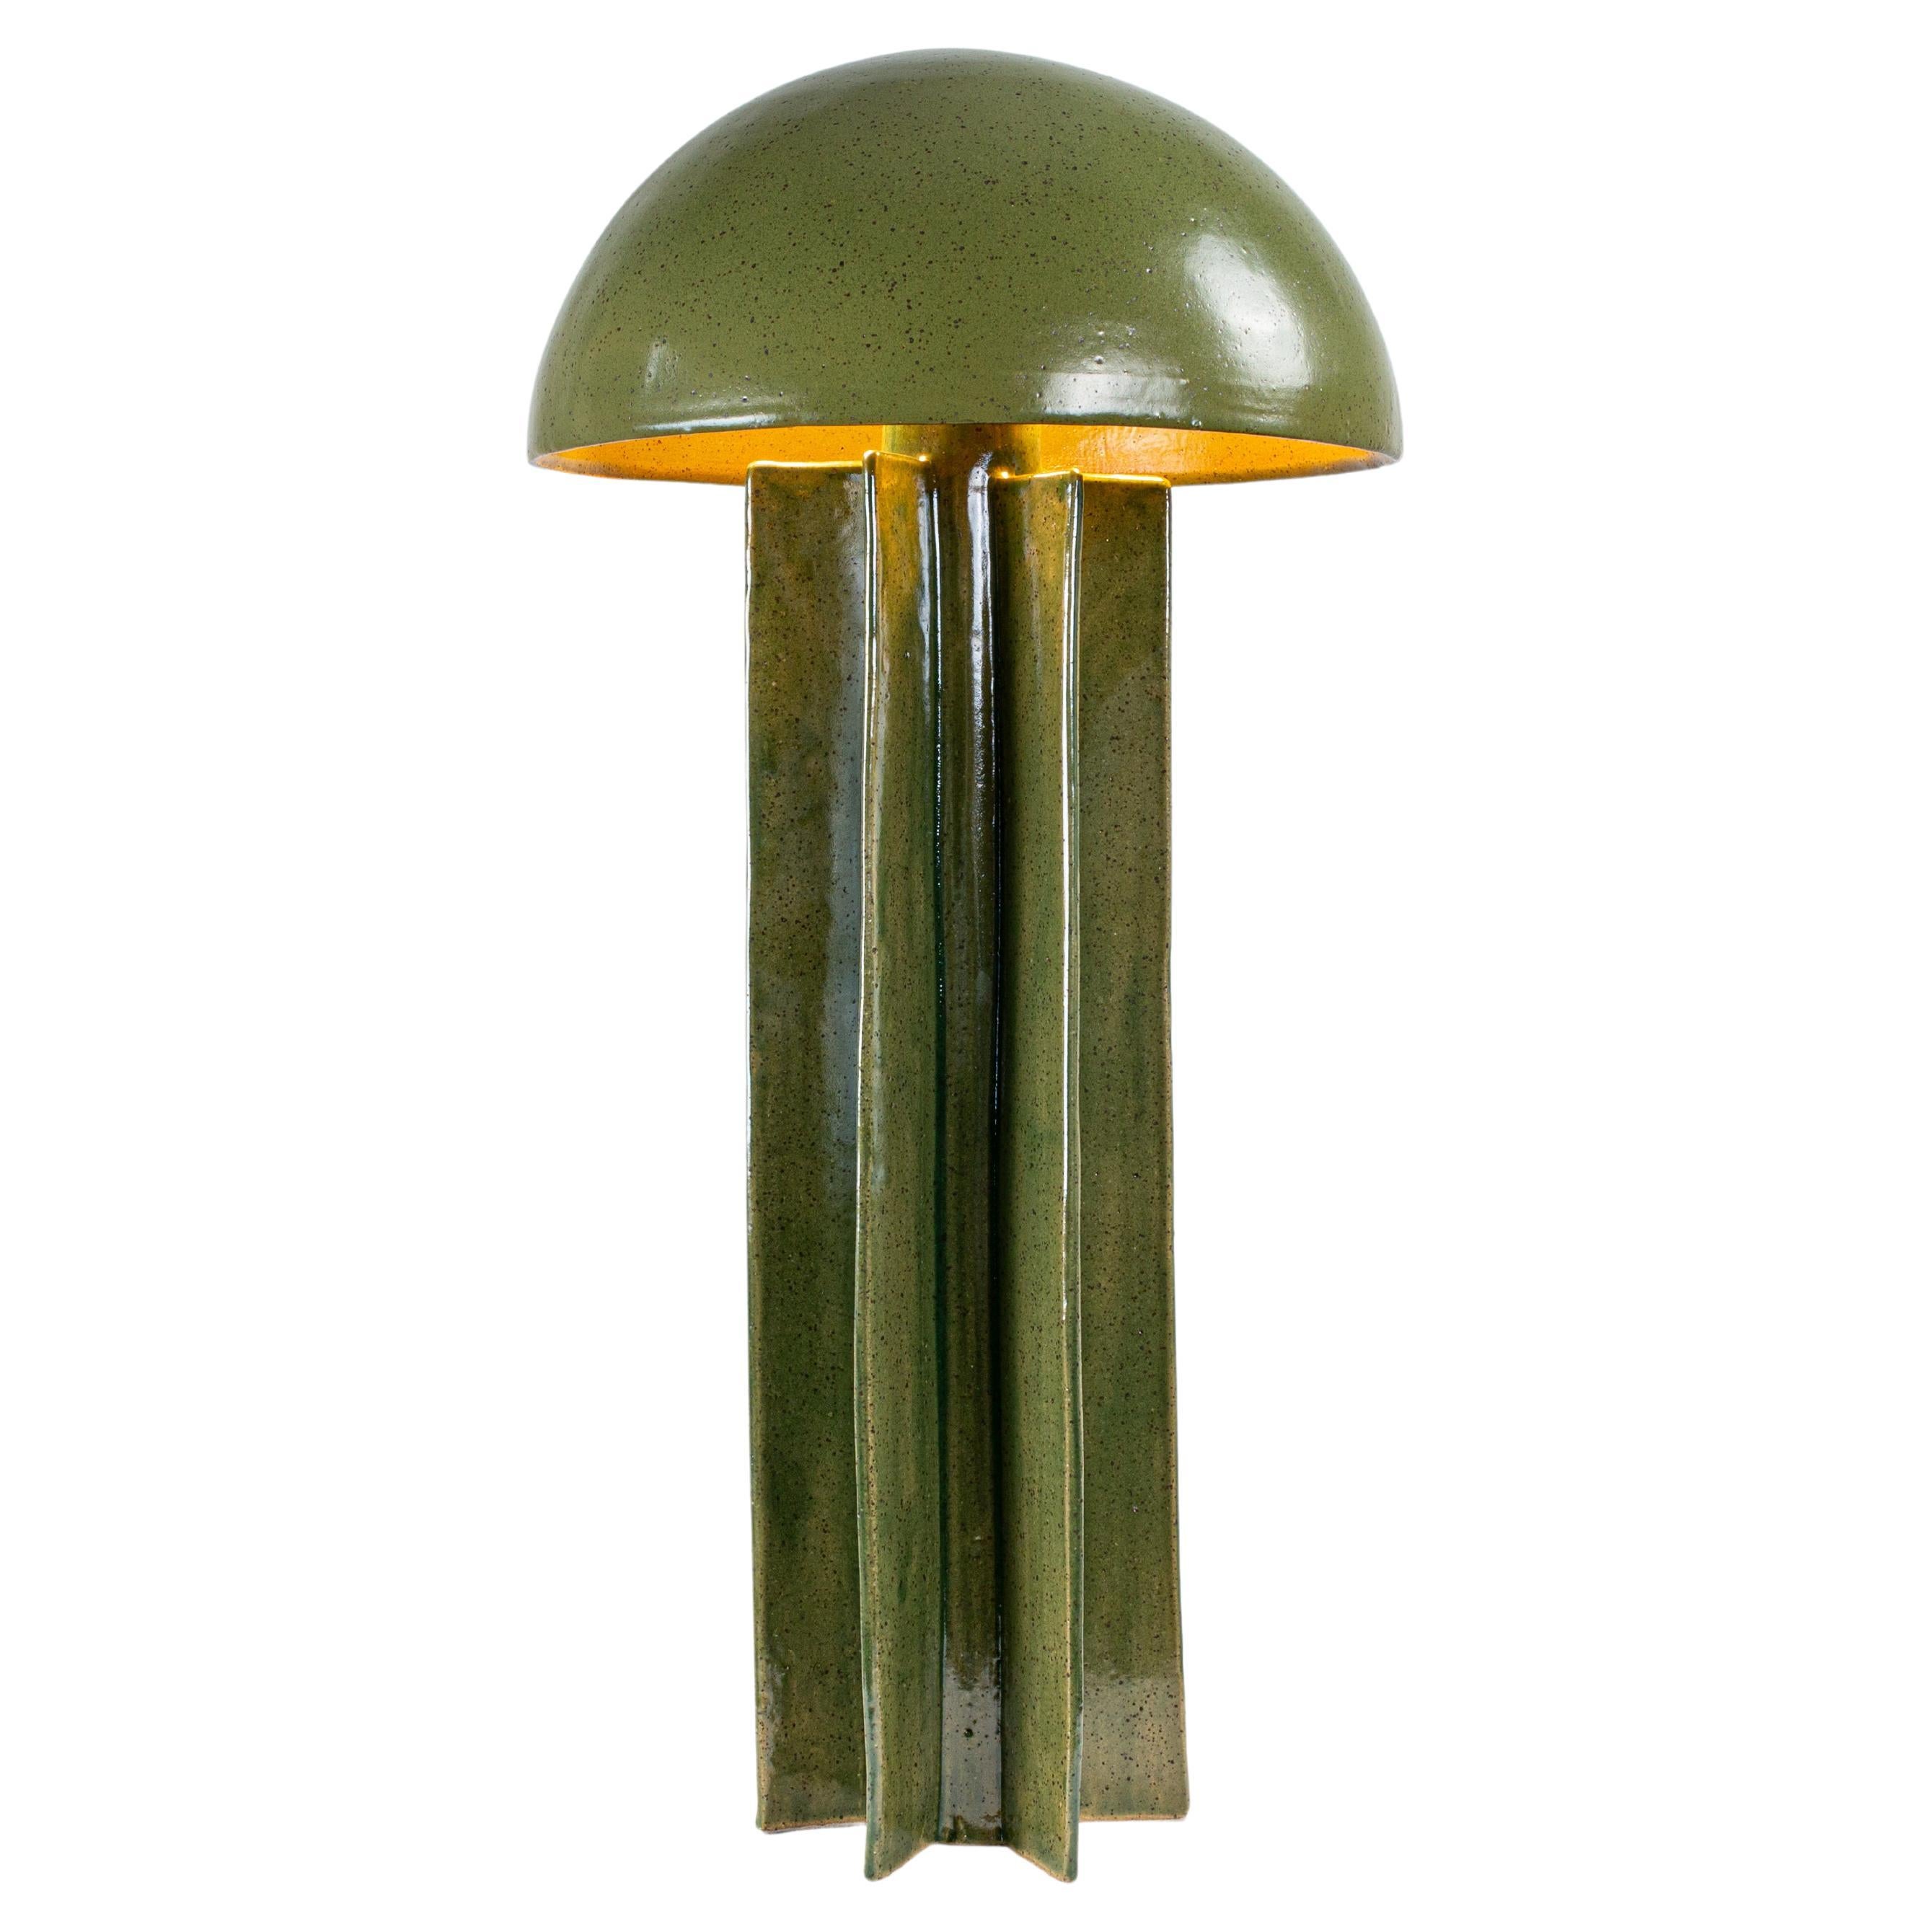 FIN table lamp, Green Glaze Finish, hanbuilt ceramic dome lamp by Kalin Asenov